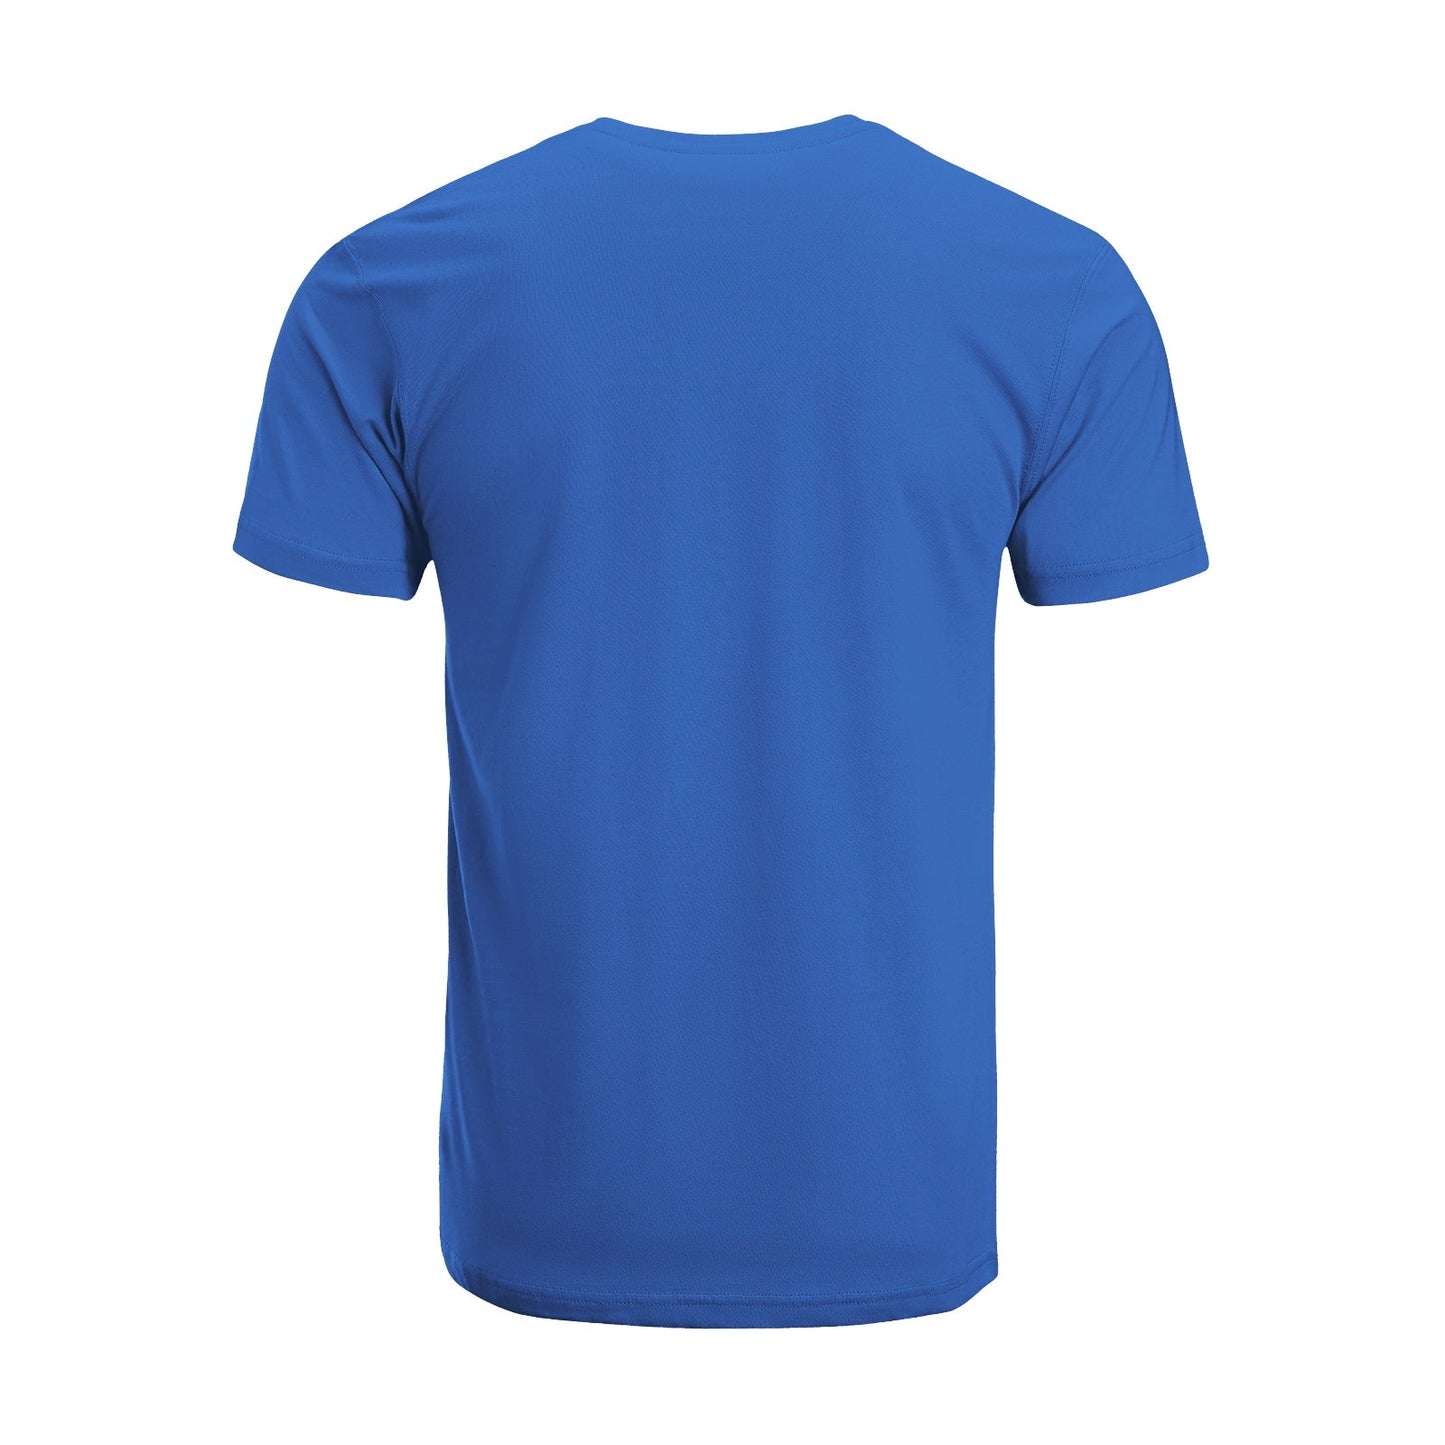 Unisex Short Sleeve Crew Neck Cotton Jersey T-Shirt VEGAN 05